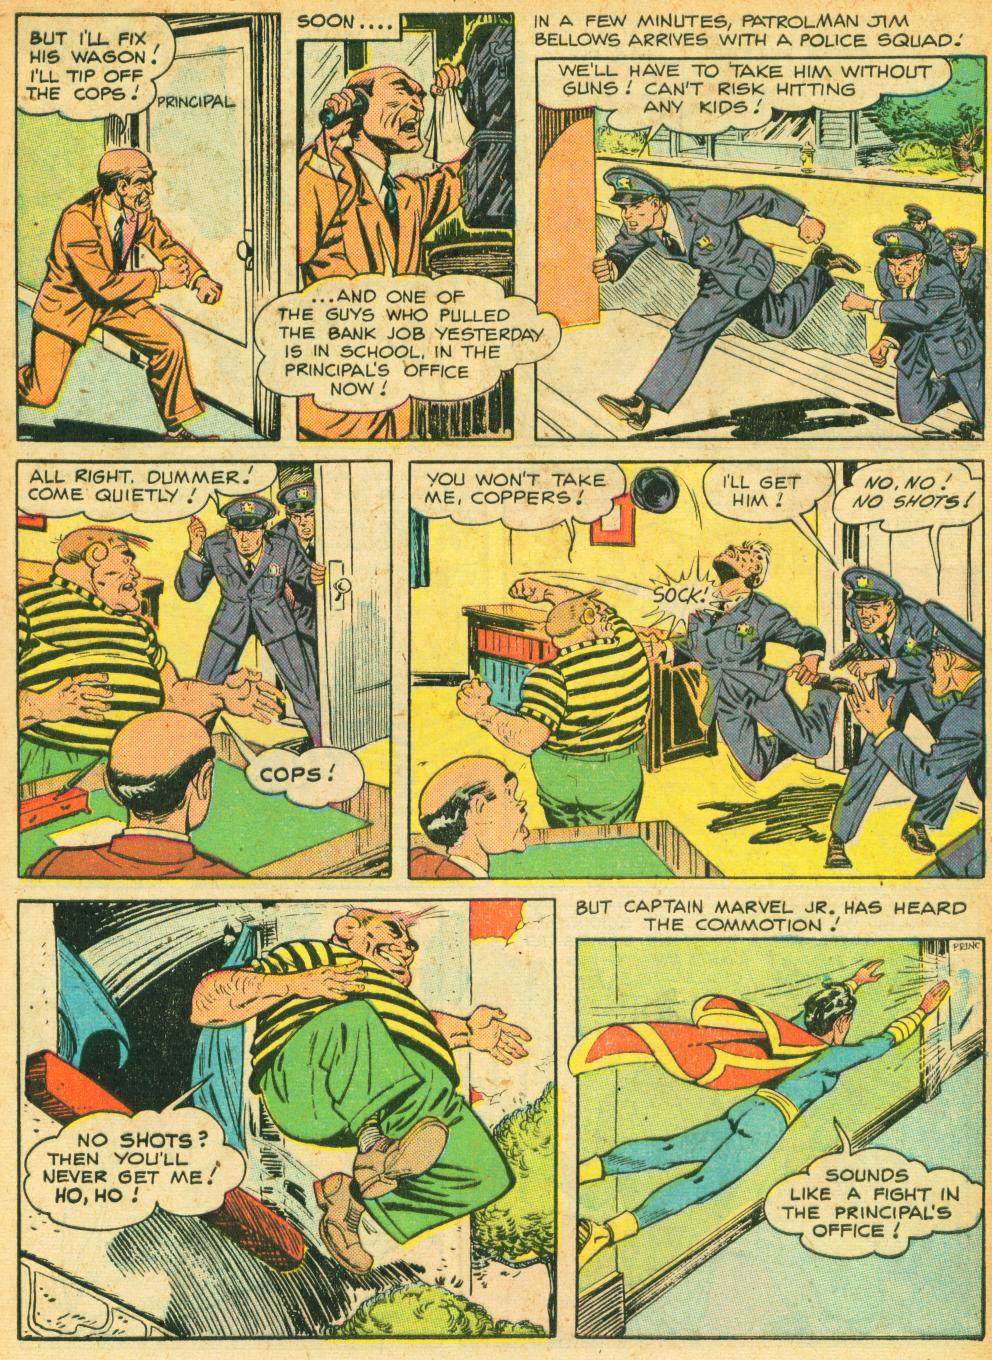 Read online Captain Marvel, Jr. comic -  Issue #69 - 20